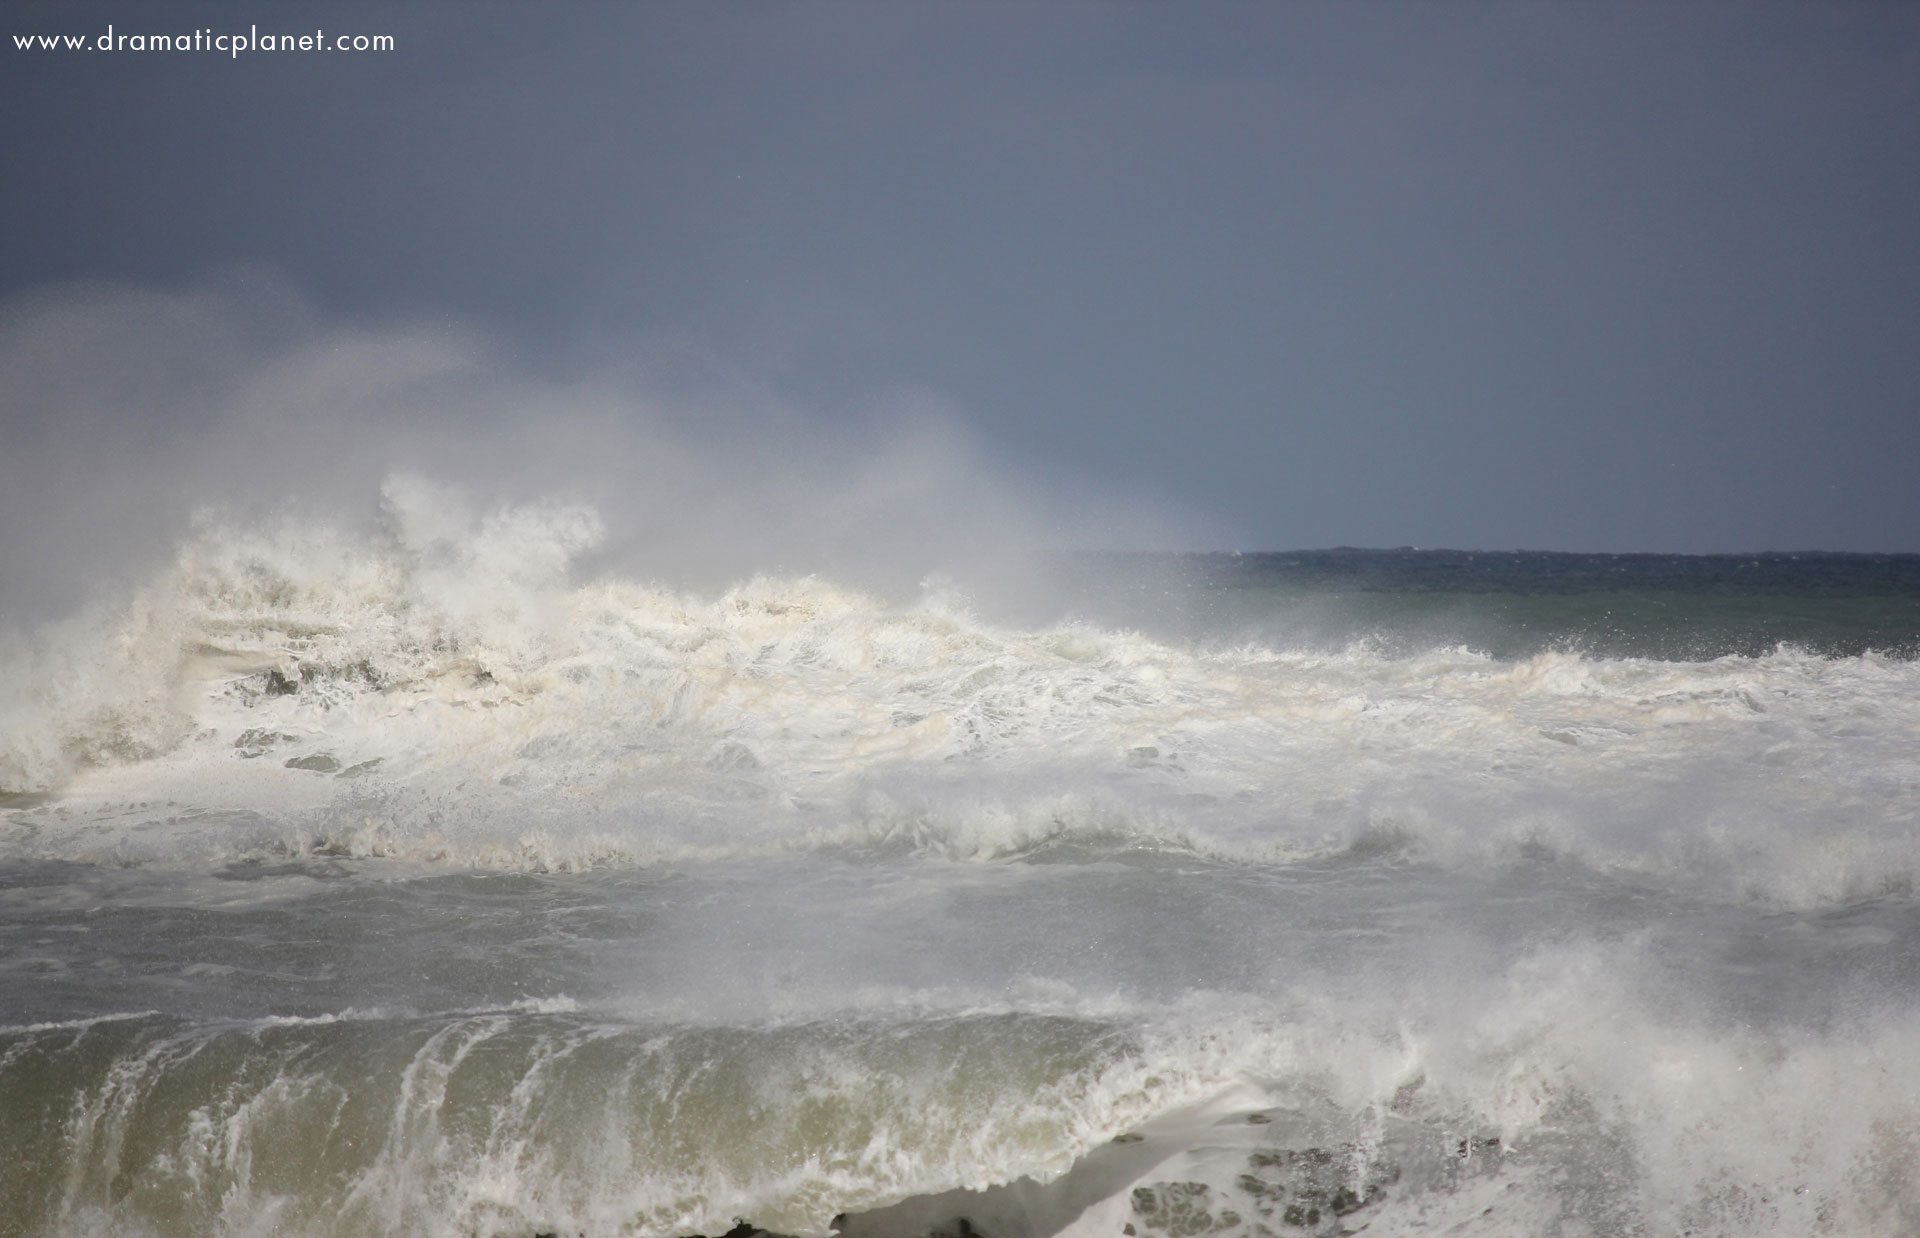 Dramatic Planet - hurricane Sandy - October 2012